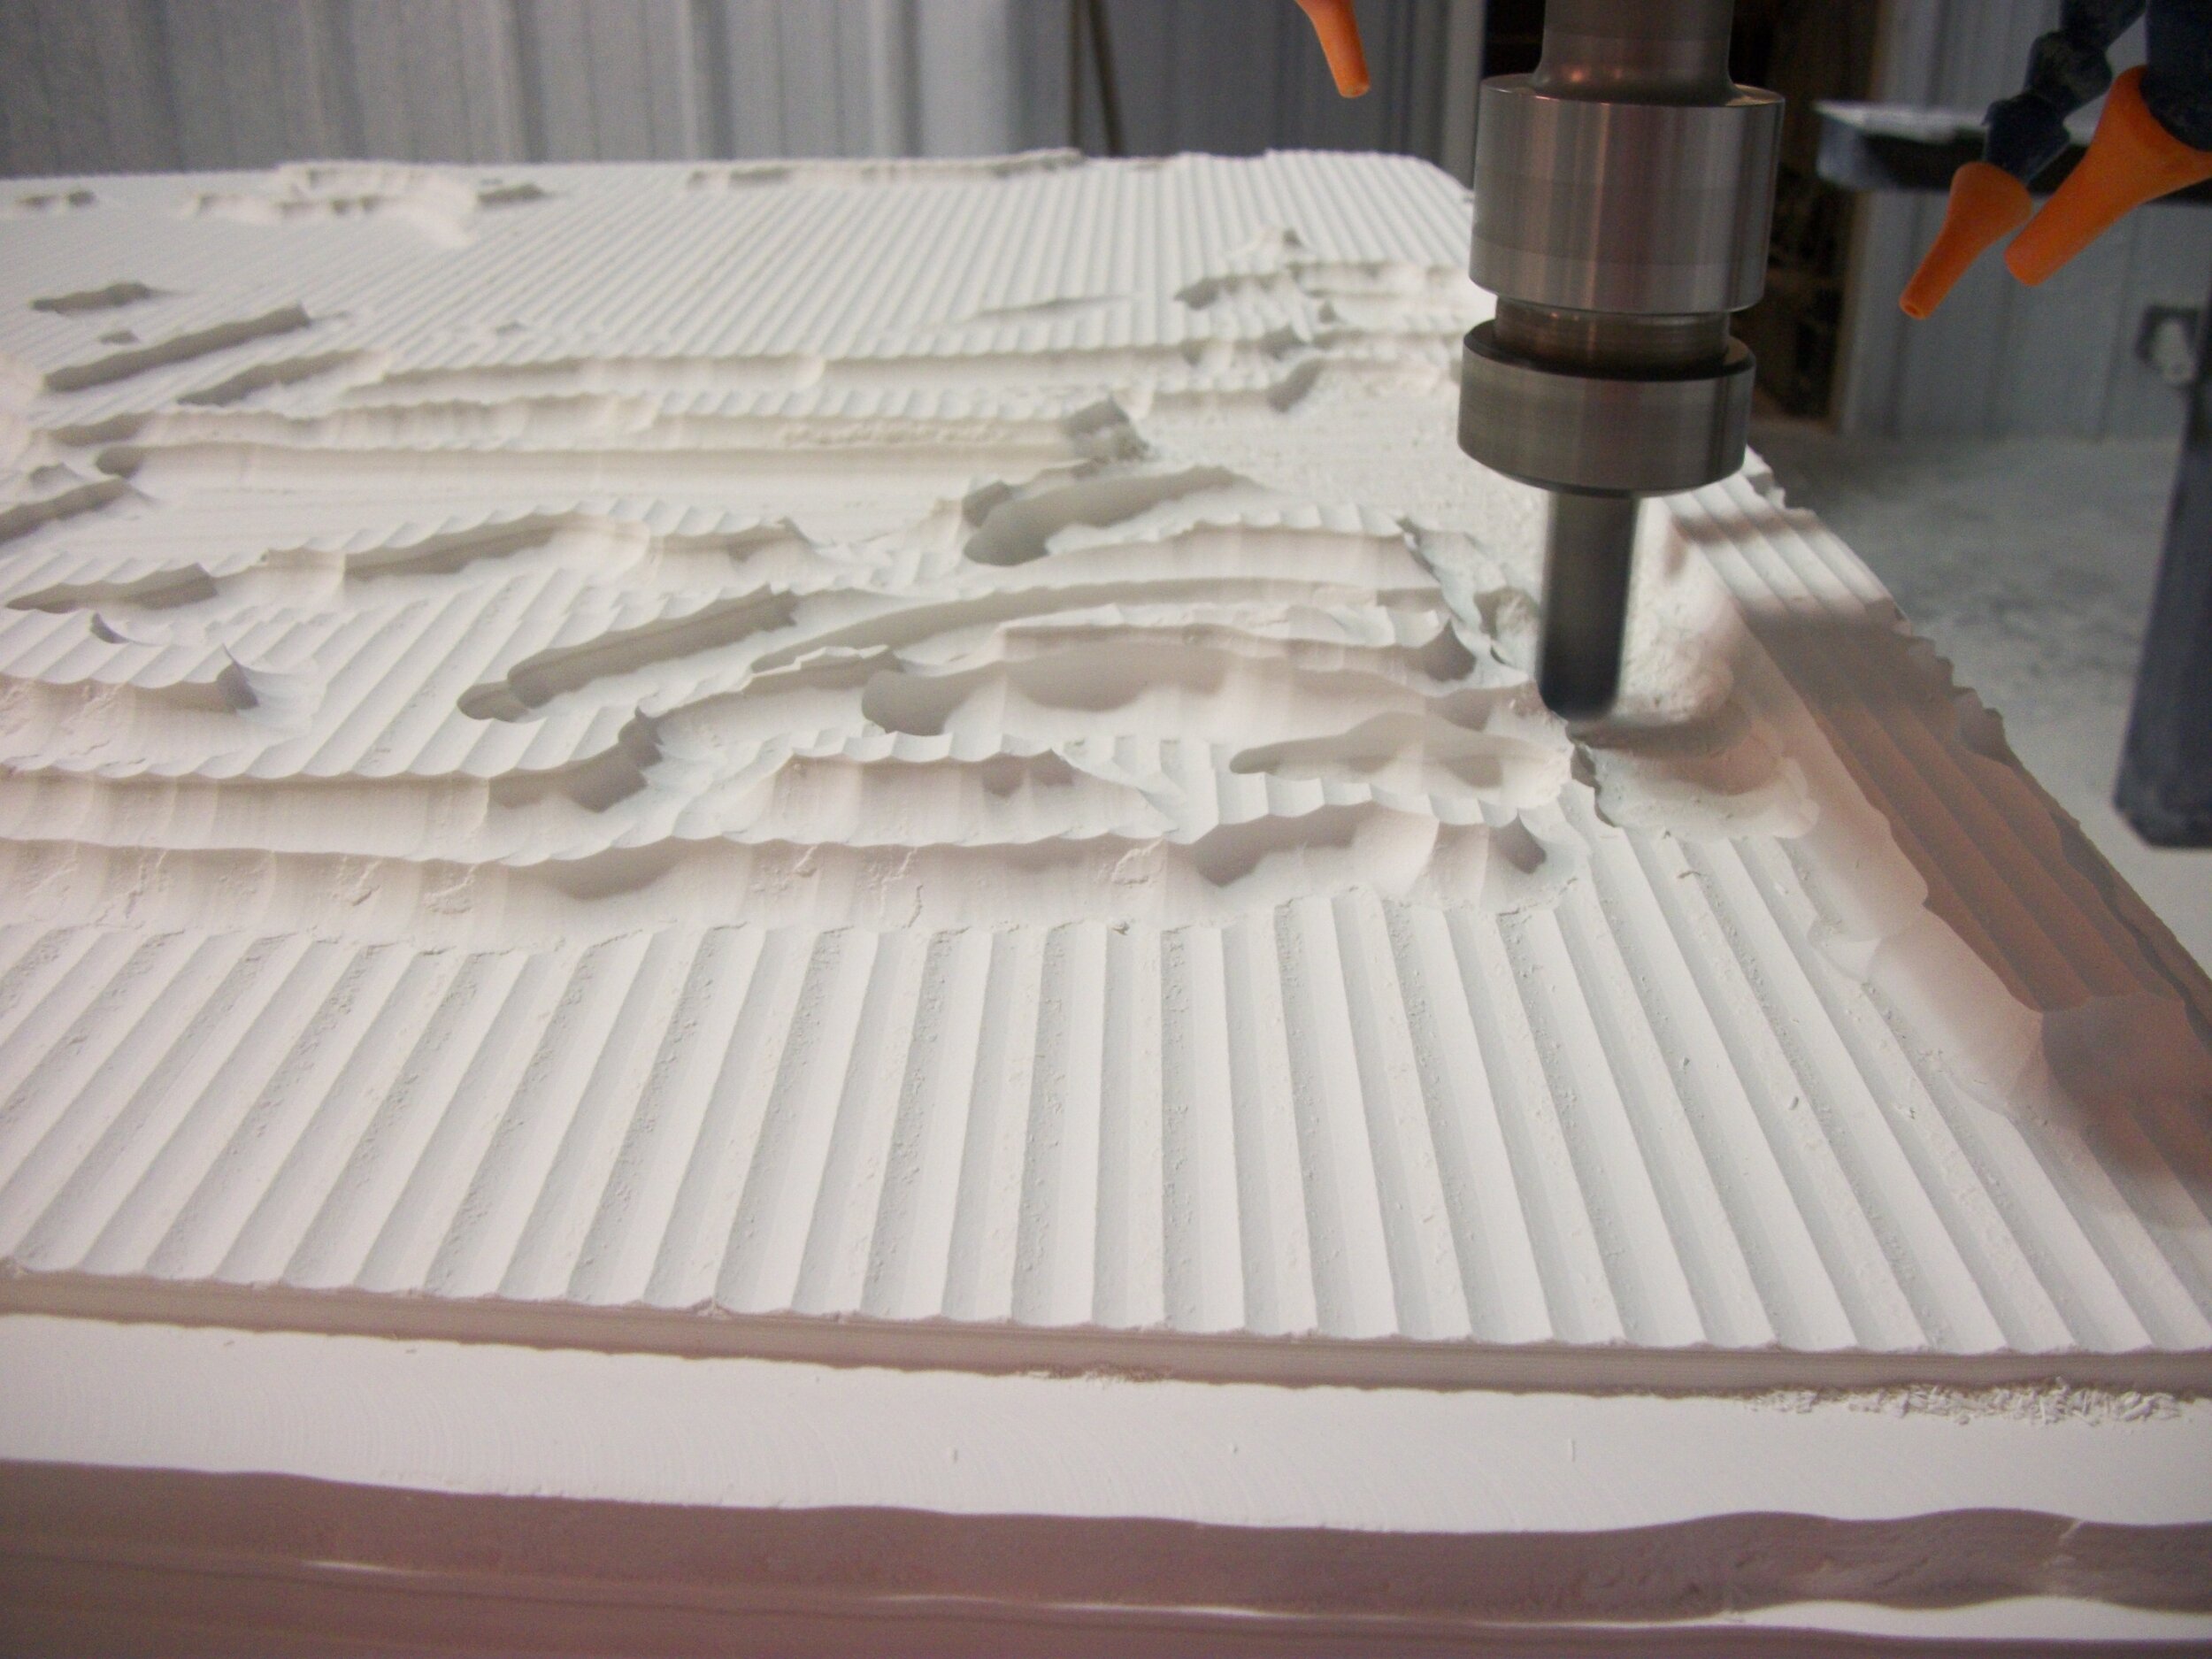   CNC milling plaster replica  